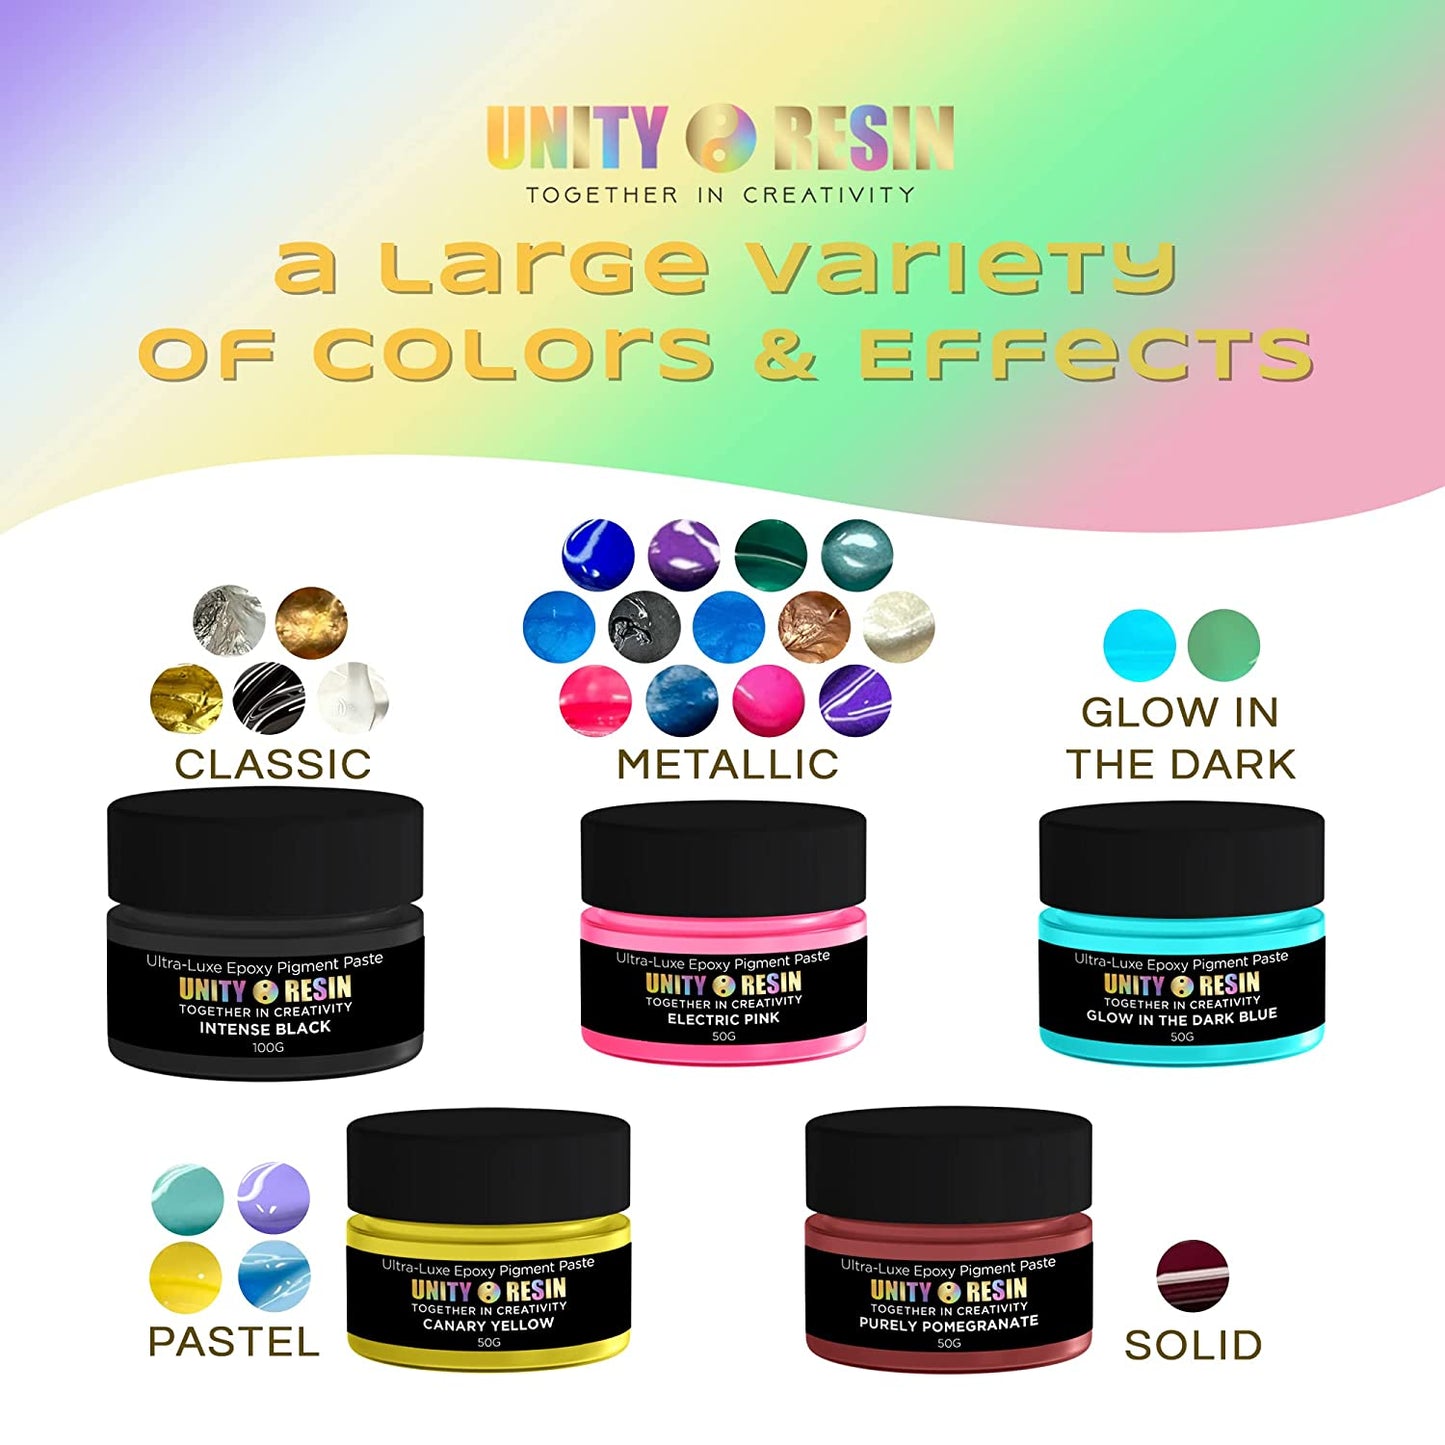 Ultra-Luxe Epoxy Resin Pigment Paste- ORANGE OBSESSION (50G).